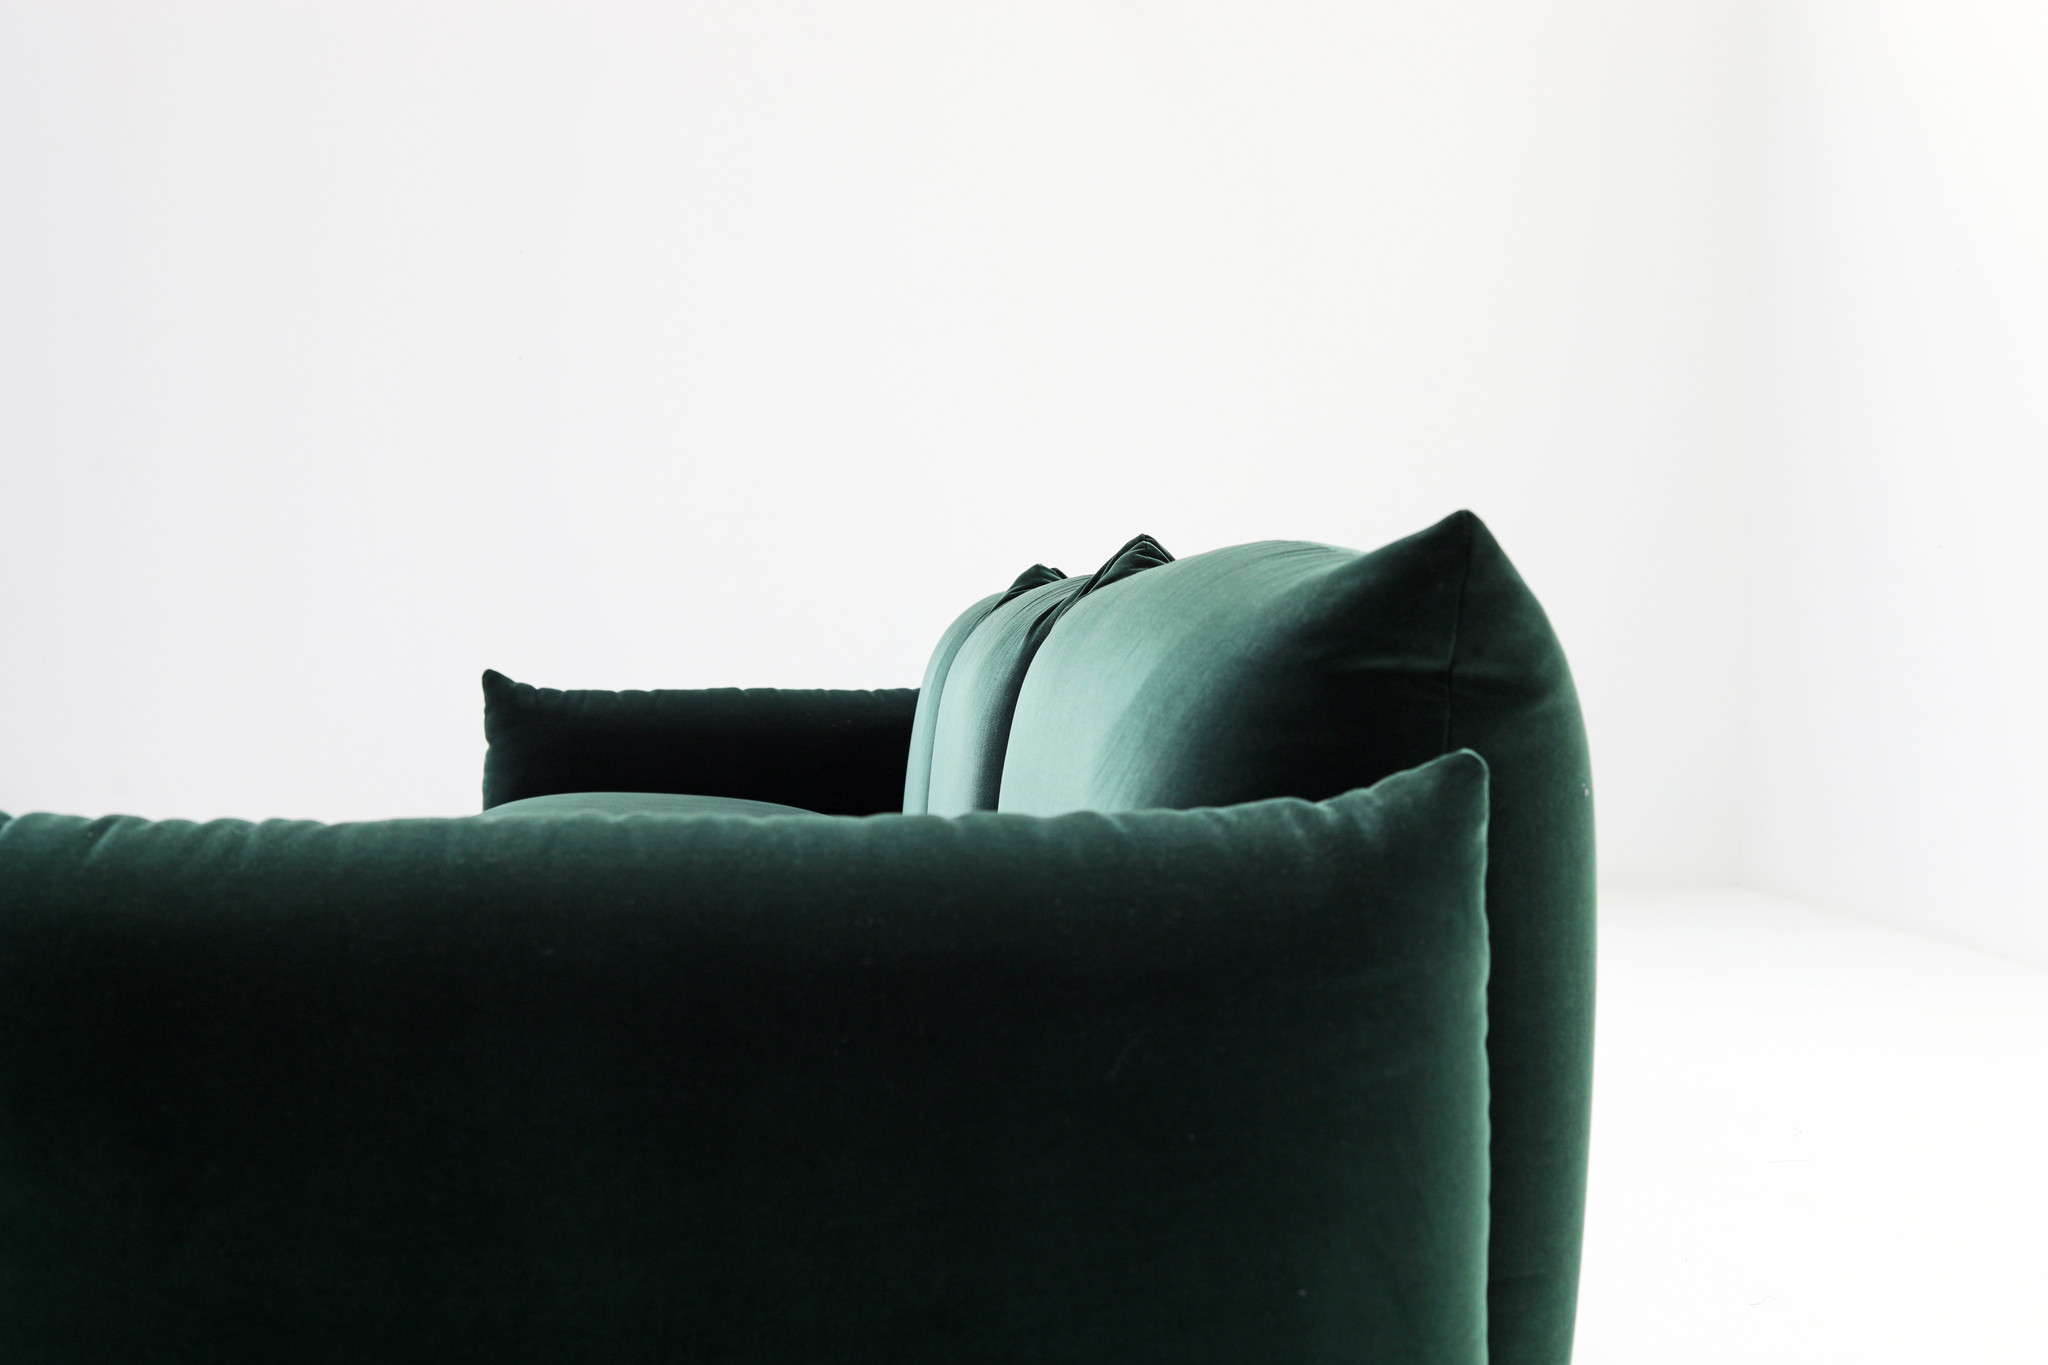 Marenco Sofa ontworpen door Mario Marenco voor Arflex